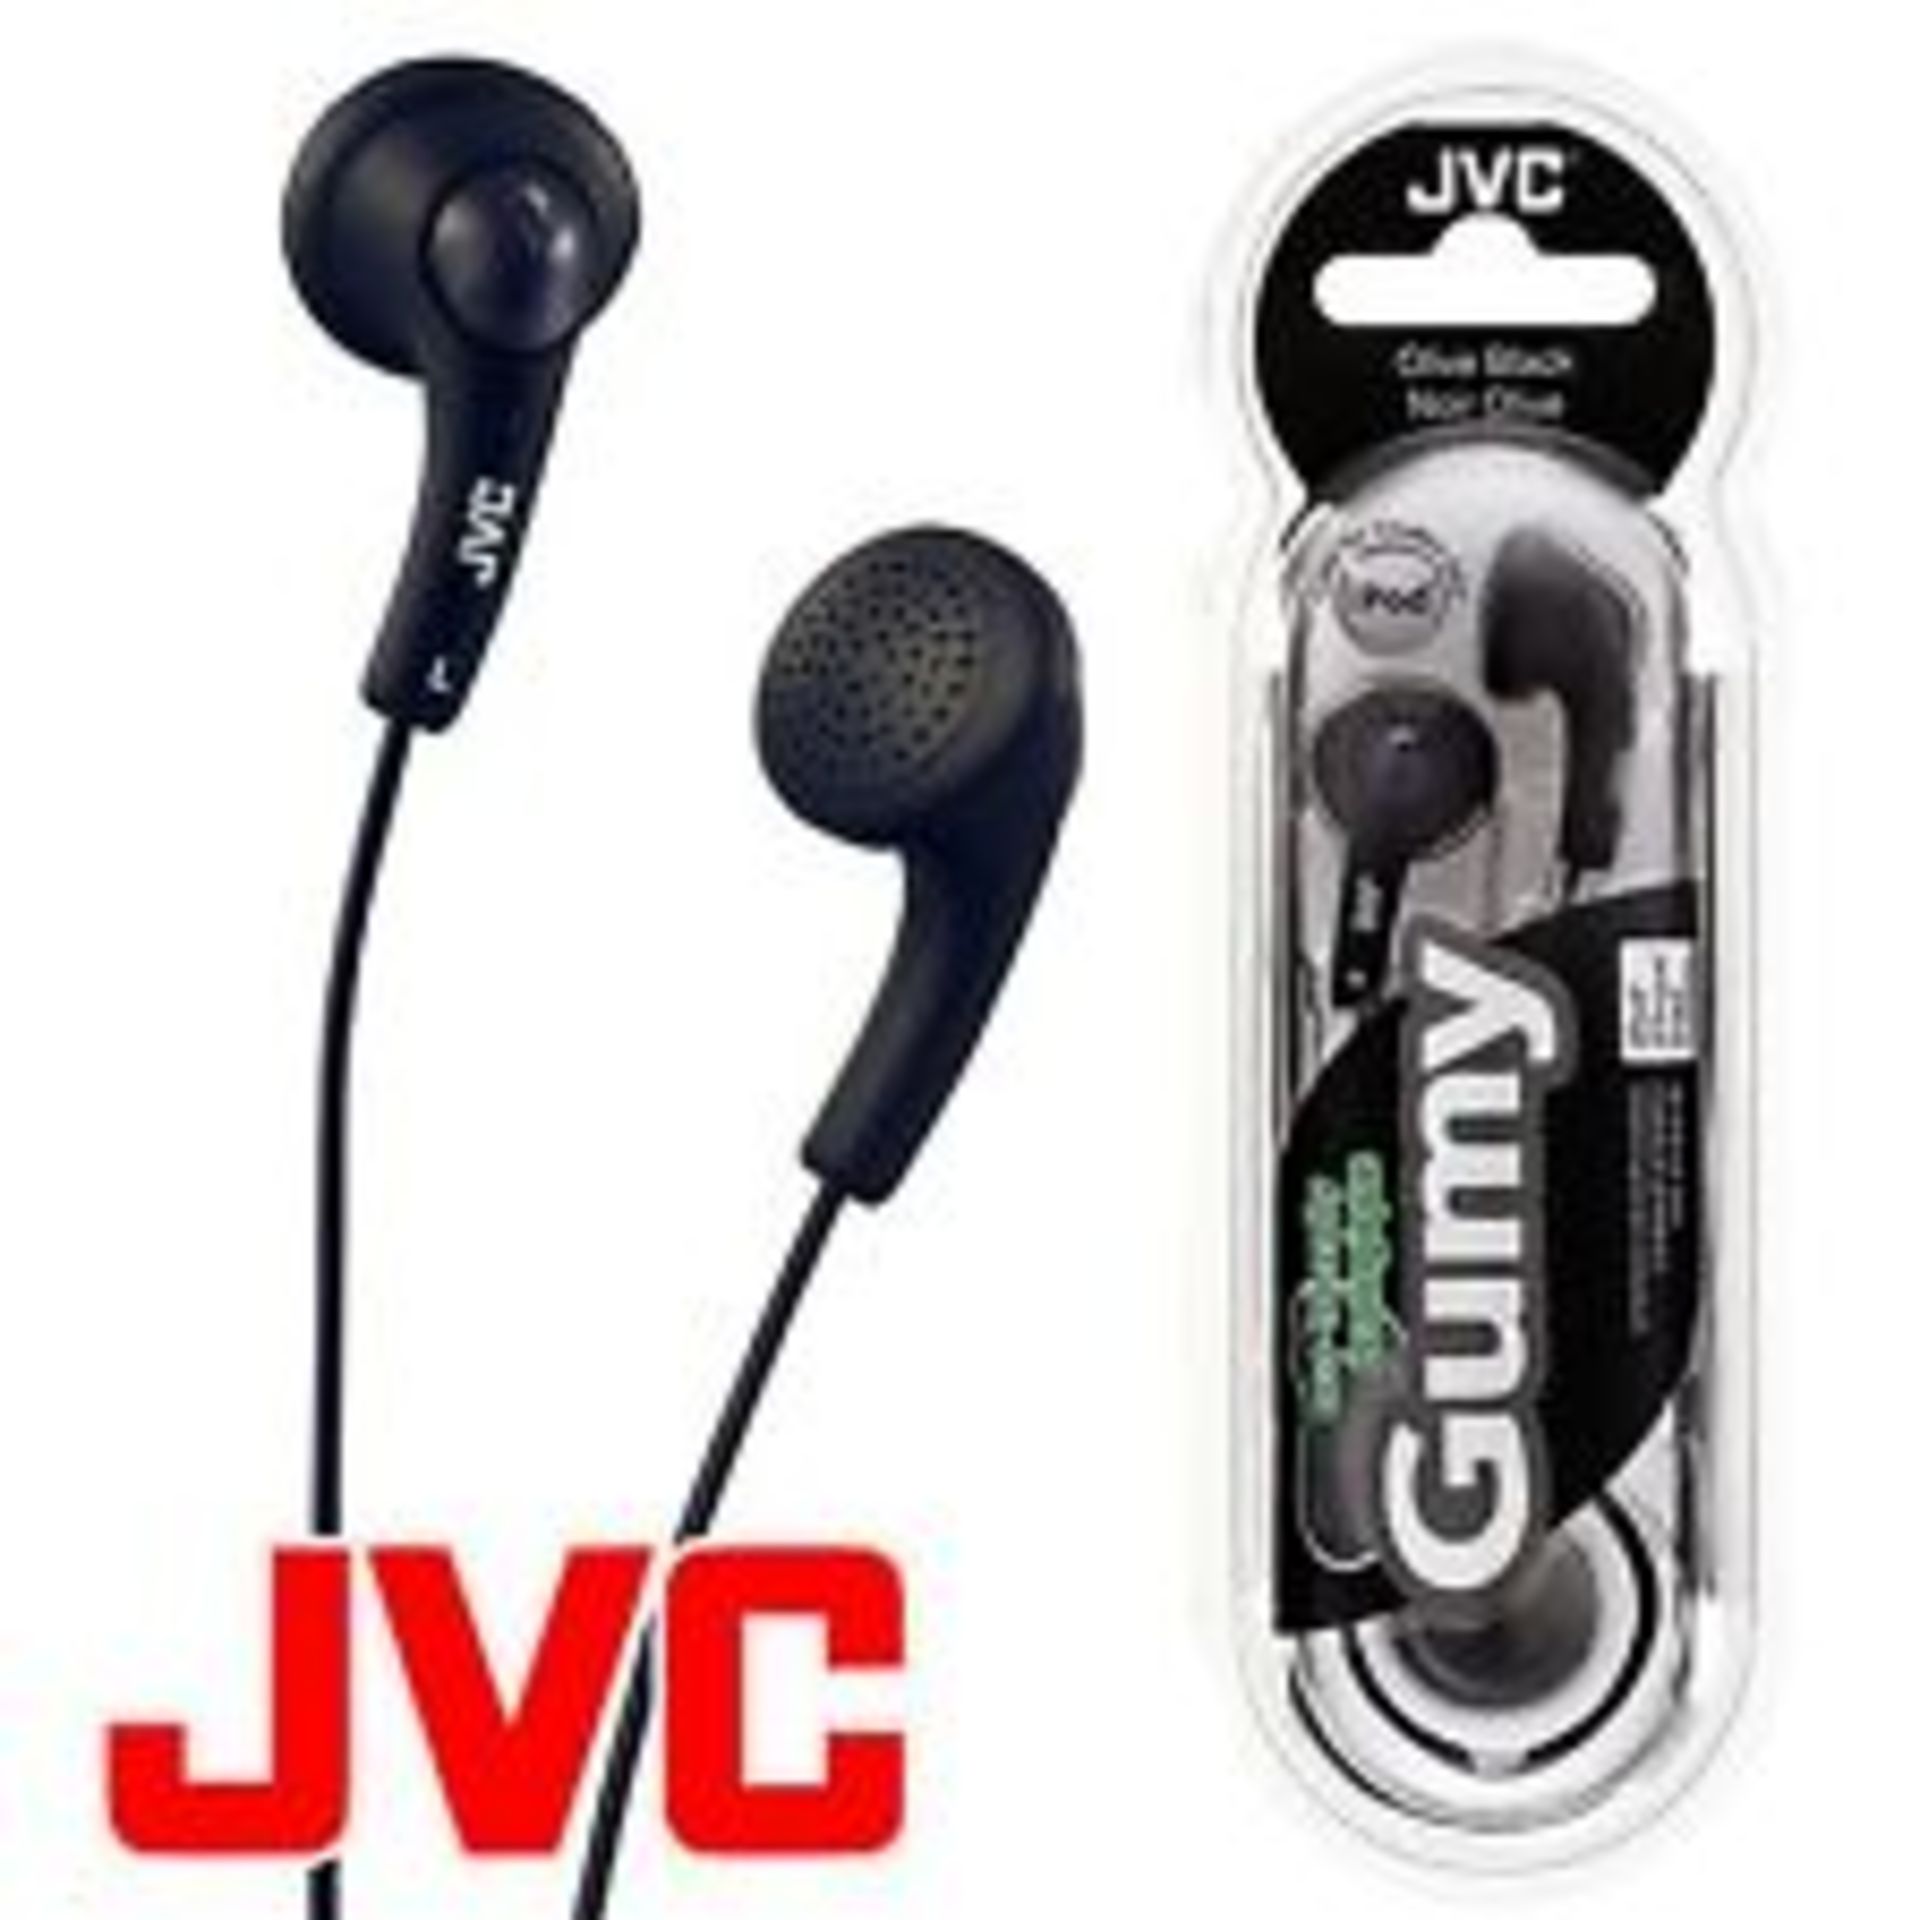 Brand New JVC Gummy Earphones Olive Black RRP: £15.99